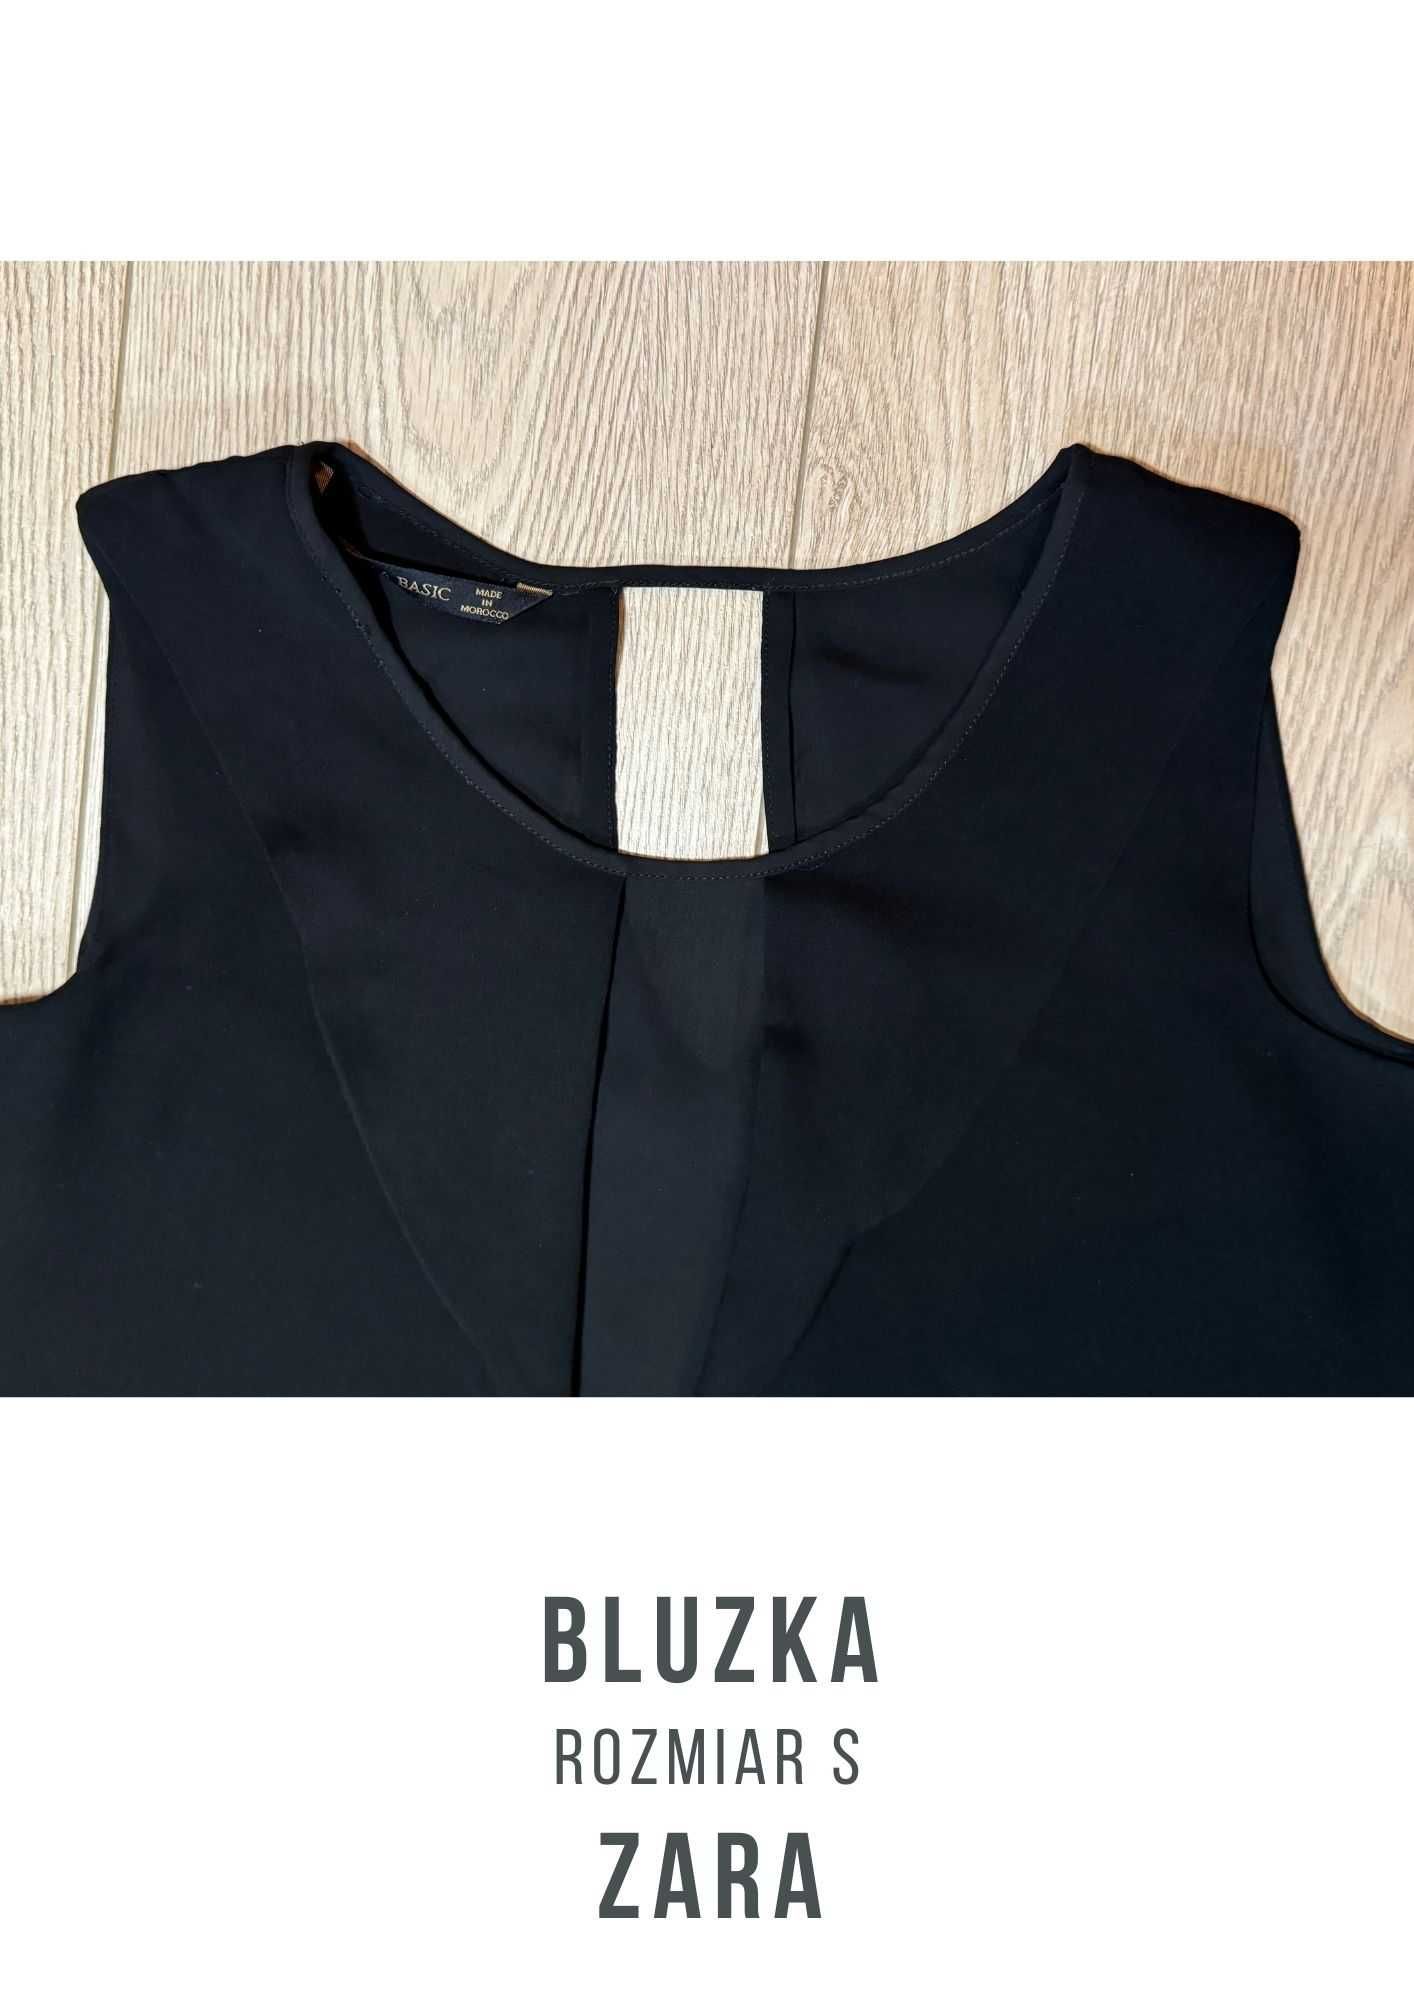 Elegancka zwiewna bluzka Zara